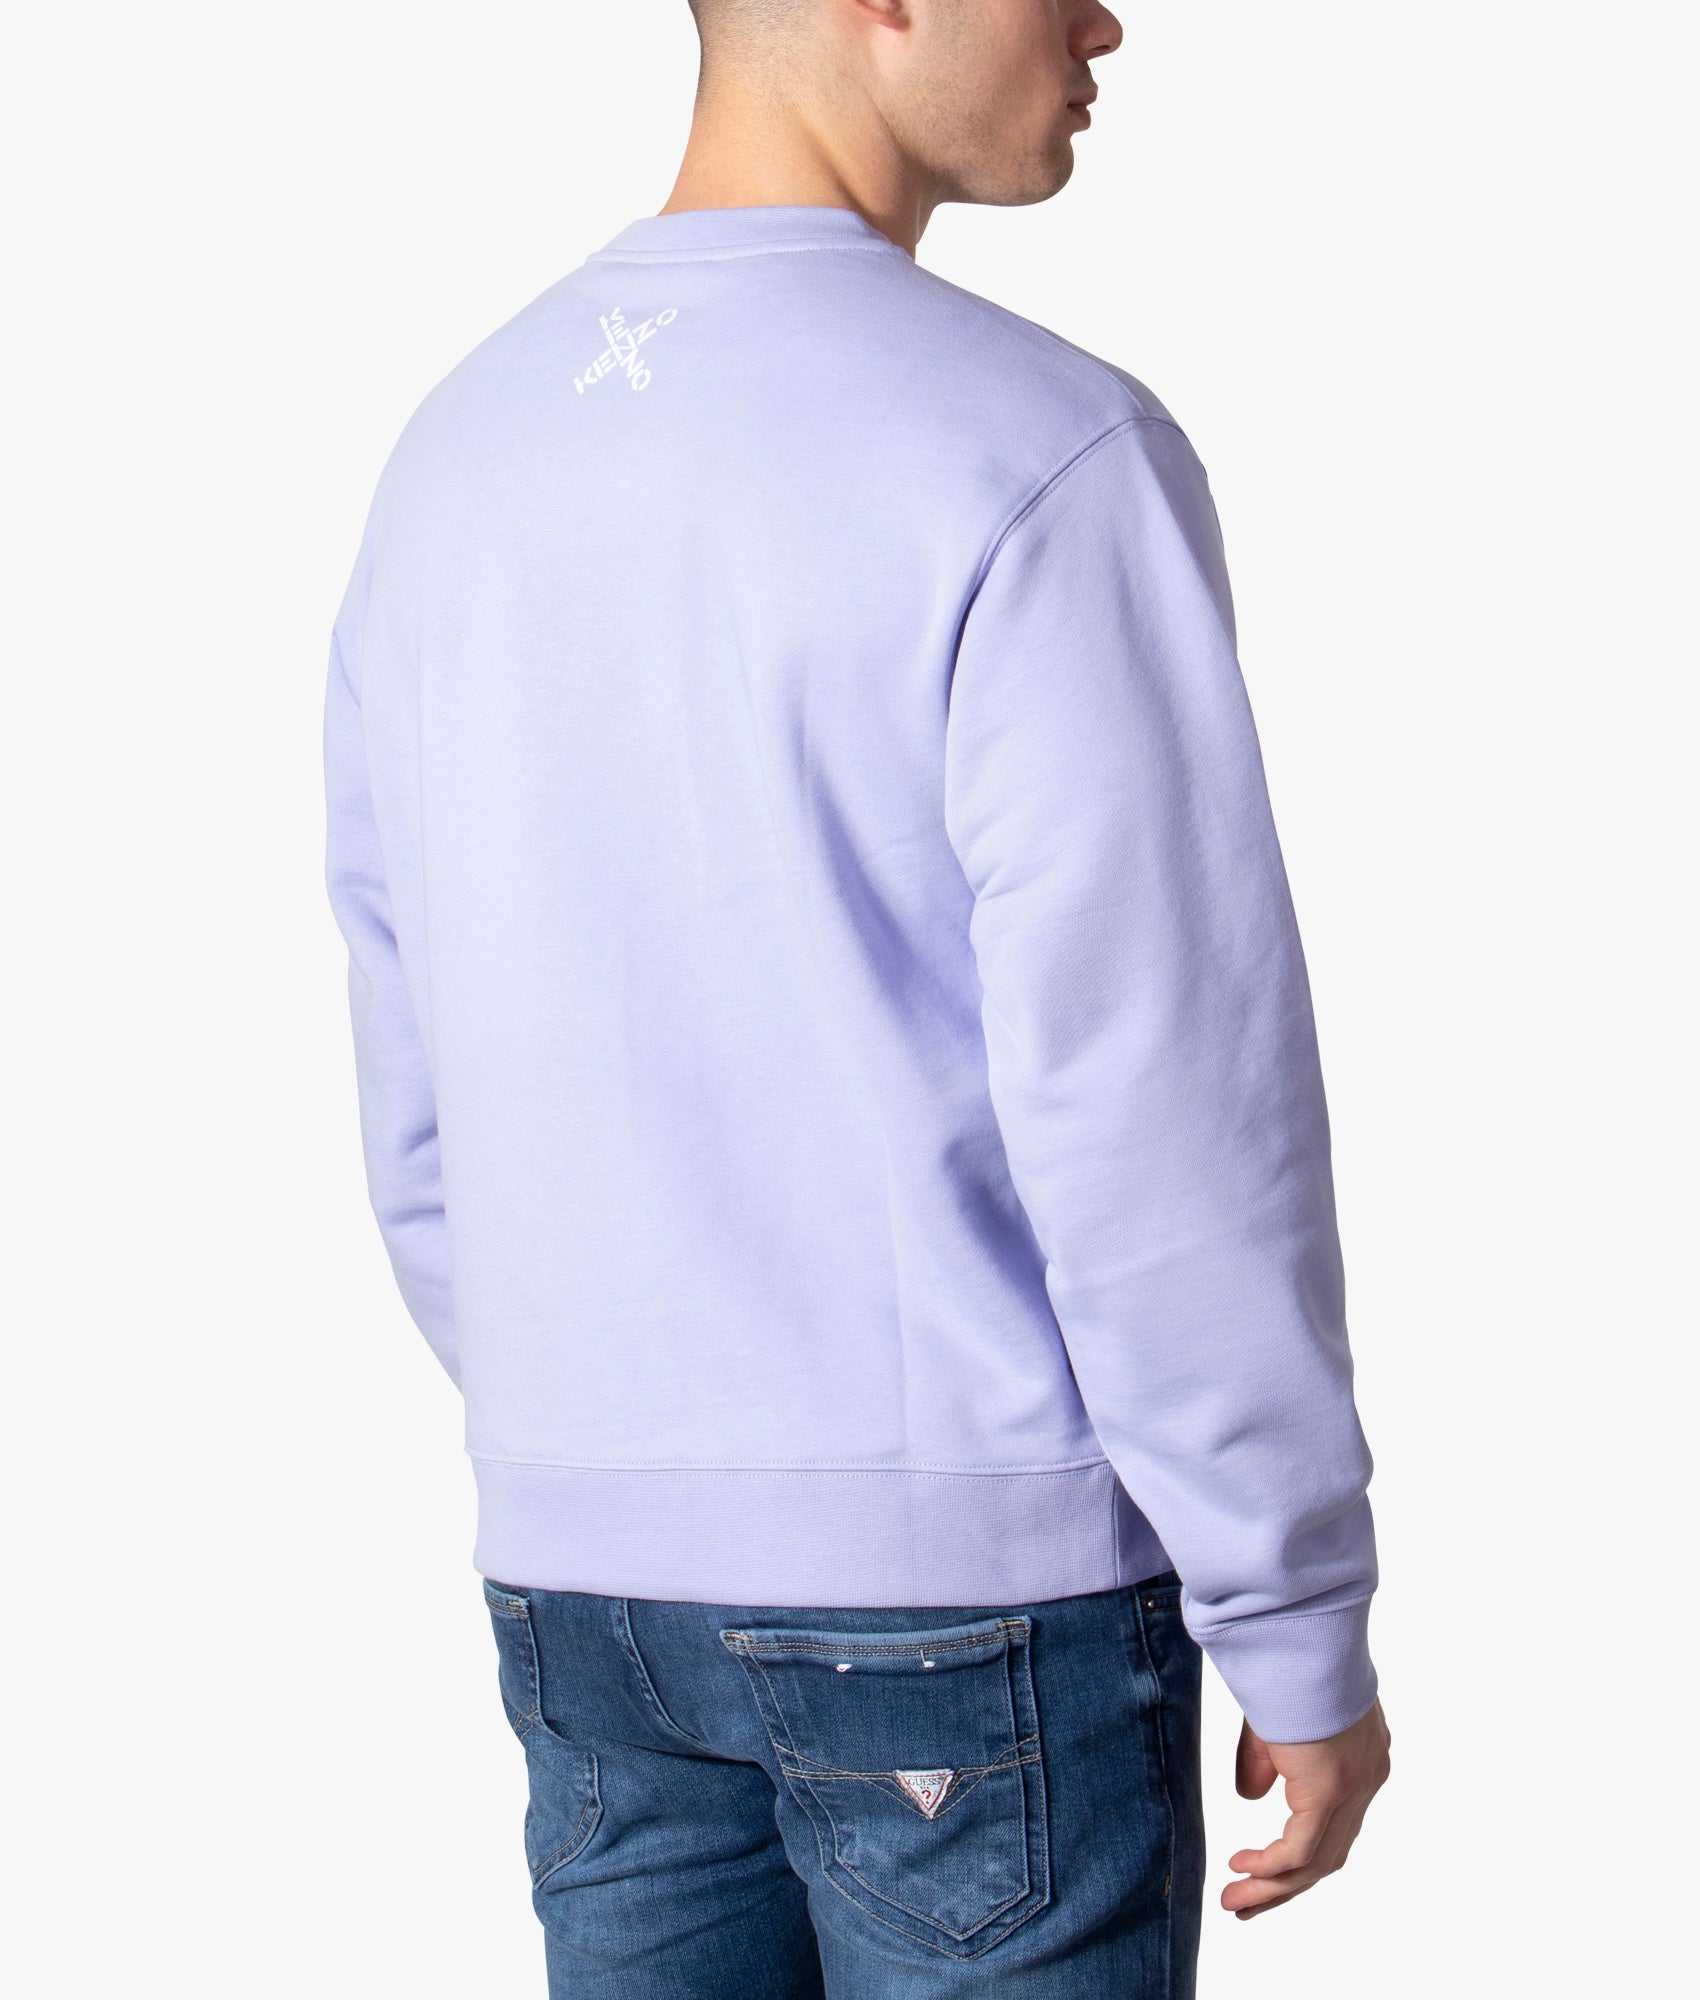 Kenzo Apricot Sport Monogram Sweatshirt - Sweatshirts from